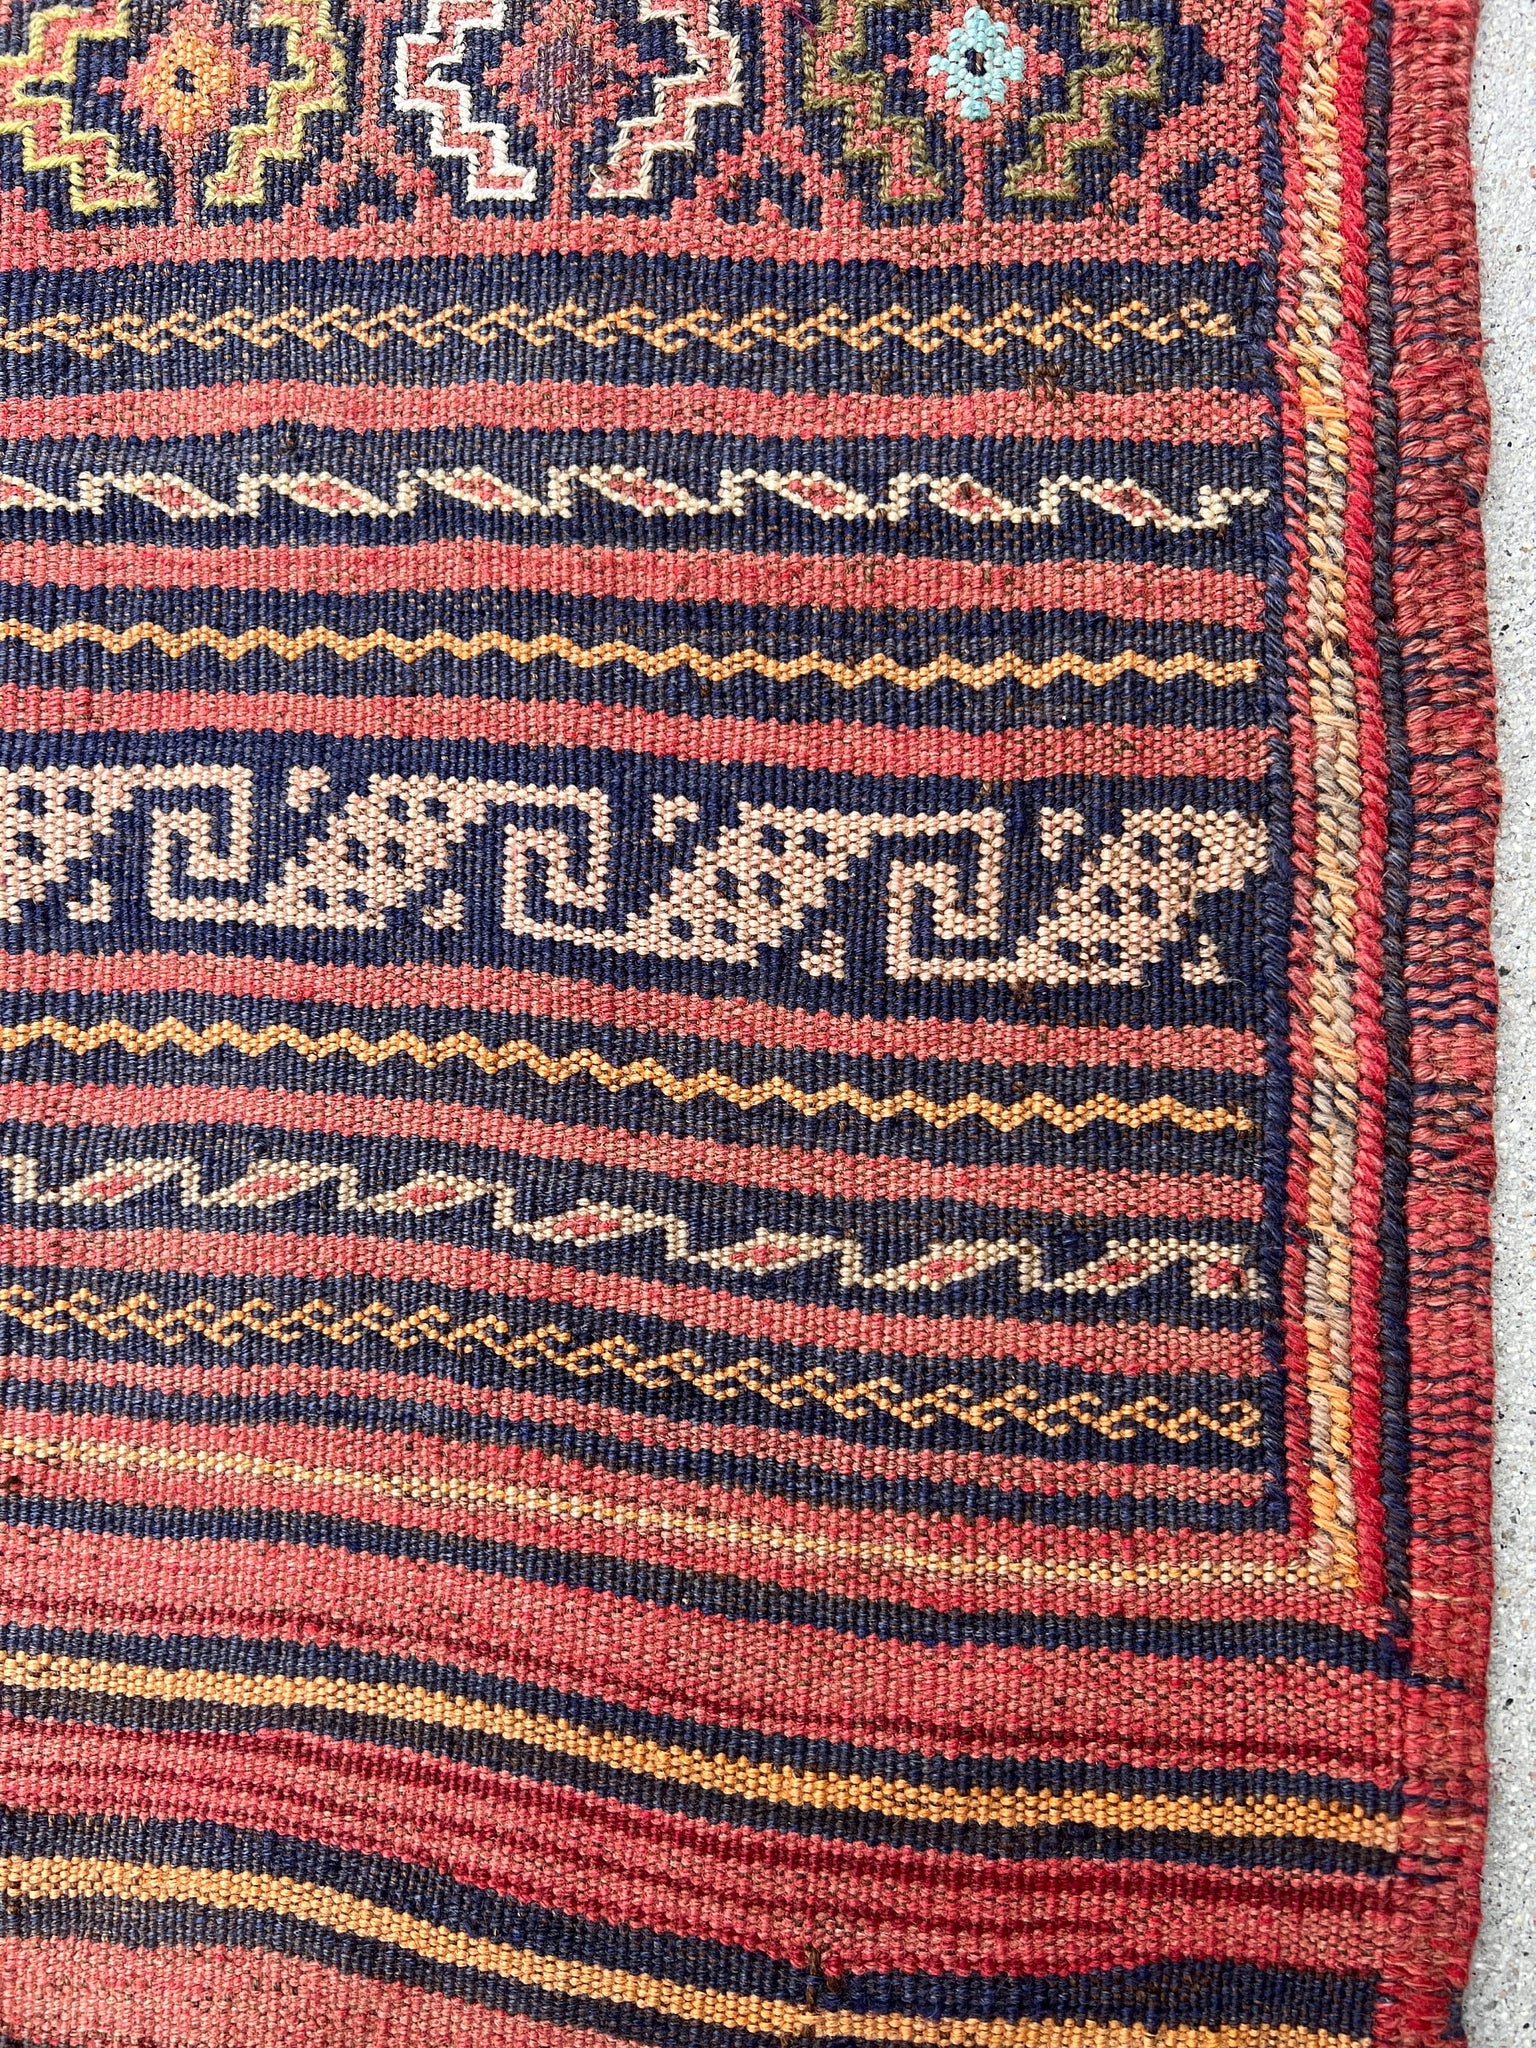 4x7 (120x215) Handmade Afghan Kilim Rug | Brick Red Midnight Navy Blue Cream Beige Orange Sky Blue Ivory Gold | Persian Flatweave Wool